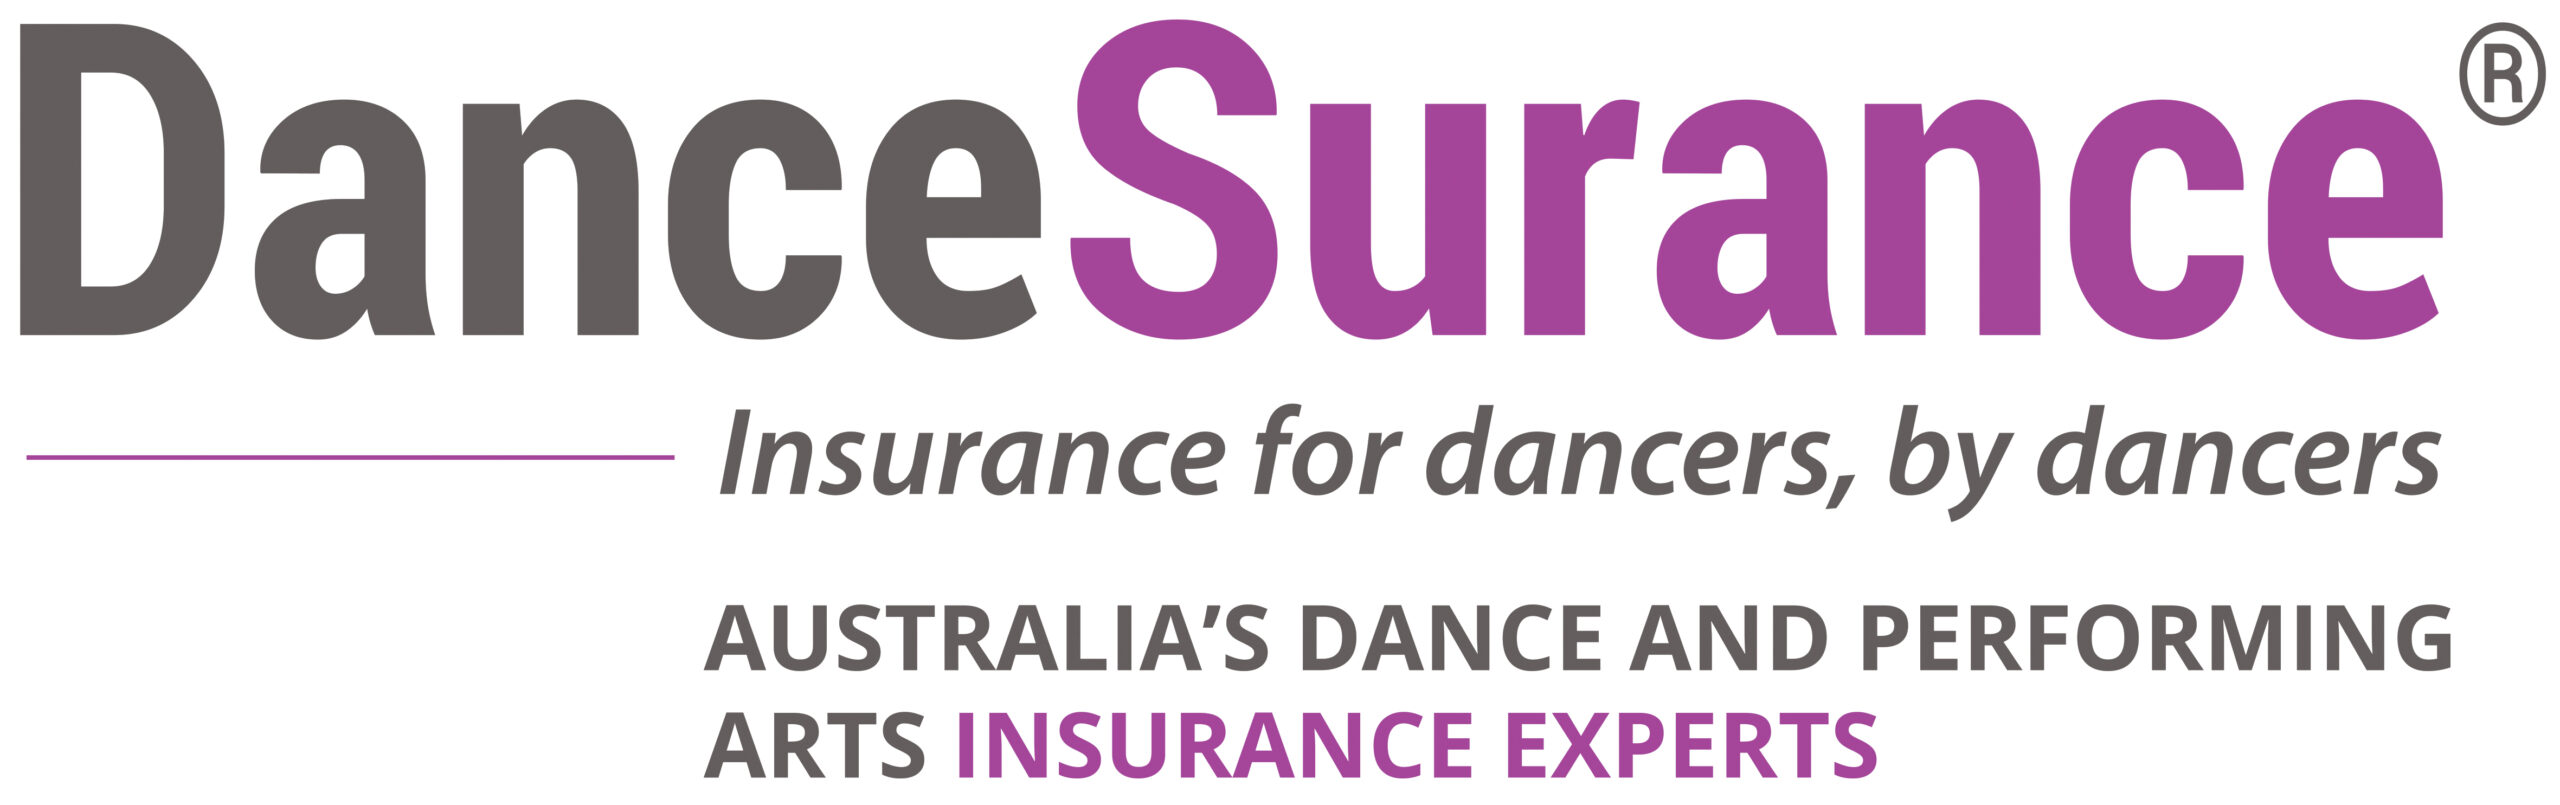 DanceSurance International